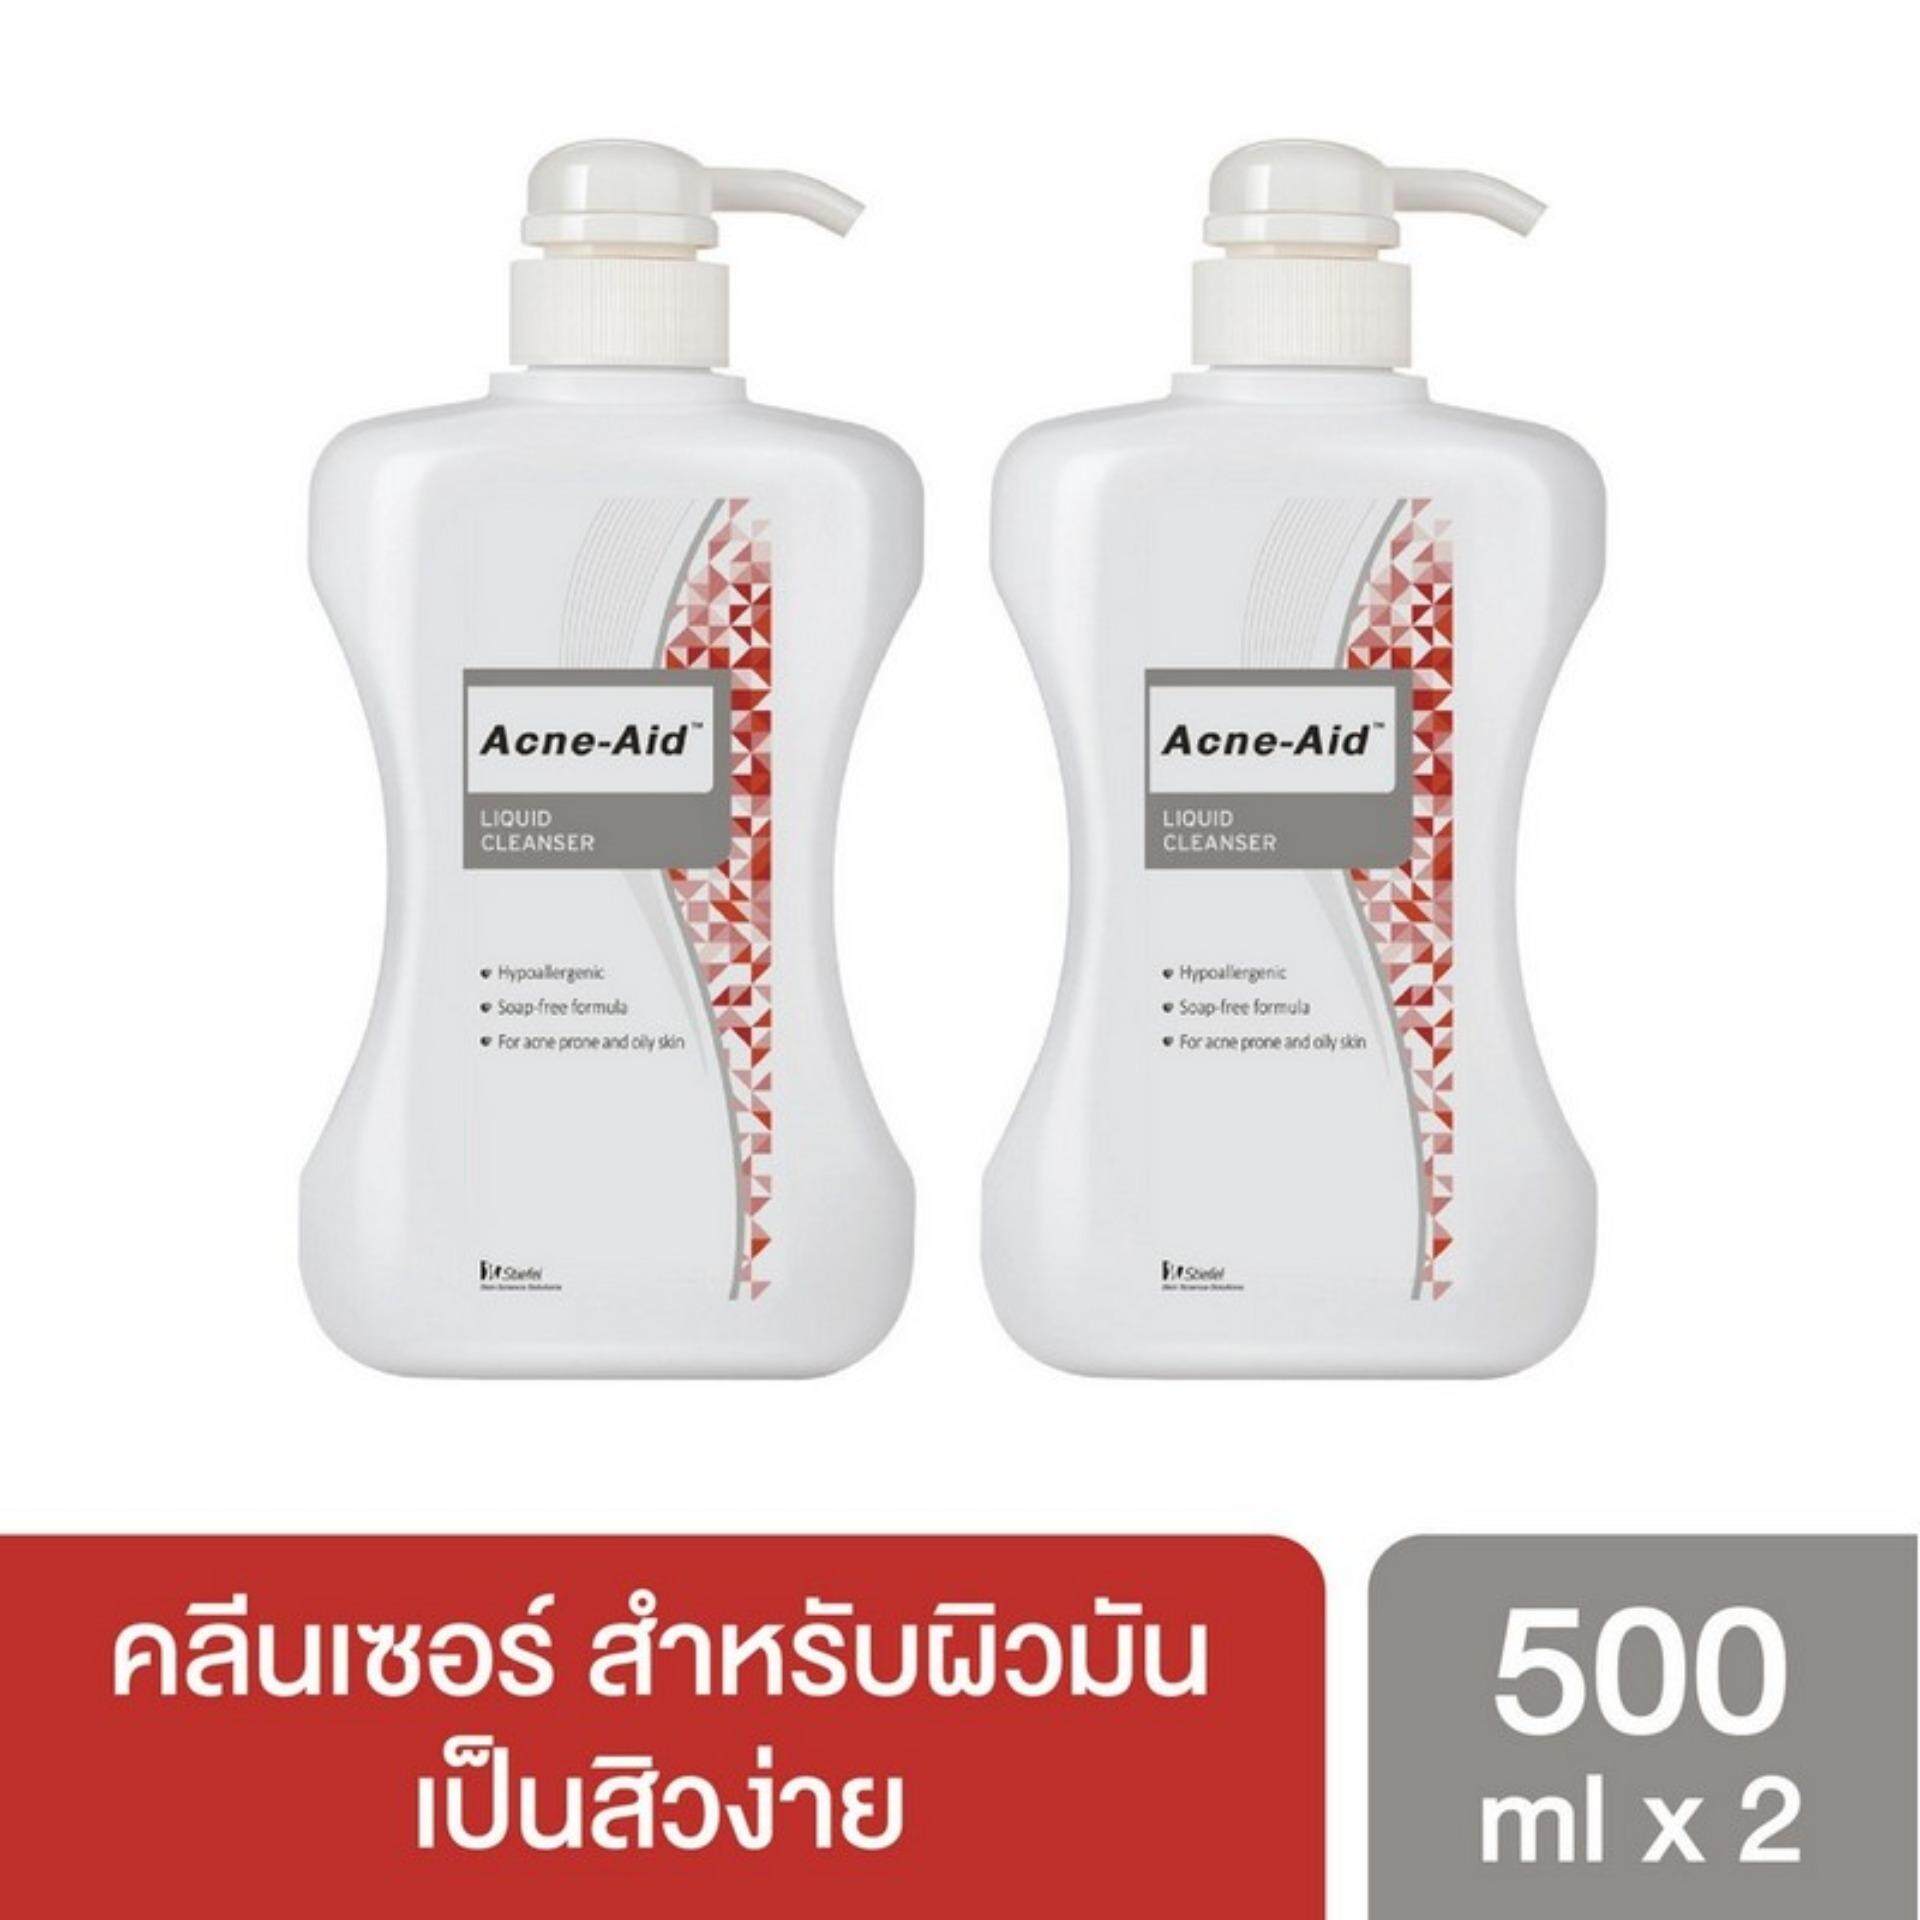 Acne-Aid แอคเน่-เอด ลิควิด คลีนเซอร์ คลีนเซอร์สำหรับปัญหาสิว เหมาะสำหรับผิวมัน สิวอุดตัน 500 มล.x2 Acne-Aid Liquid Cleanser for acne prone skin ,Suitable for  oily skin with acne 500ml x2